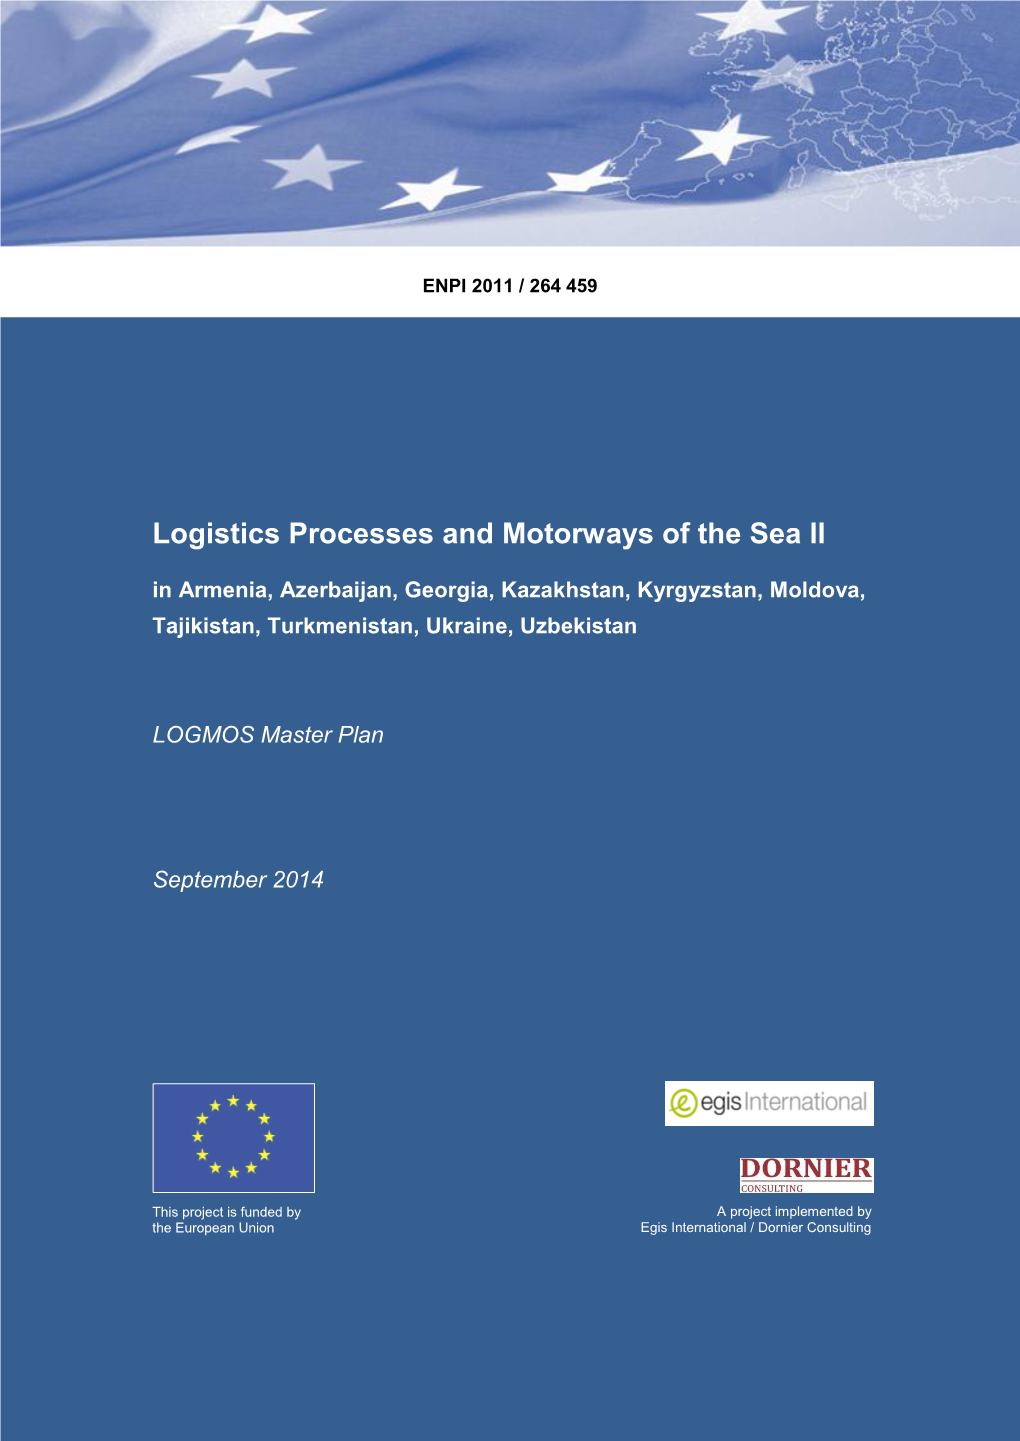 Logistics Processes and Motorways of the Sea II in Armenia, Azerbaijan, Georgia, Kazakhstan, Kyrgyzstan, Moldova